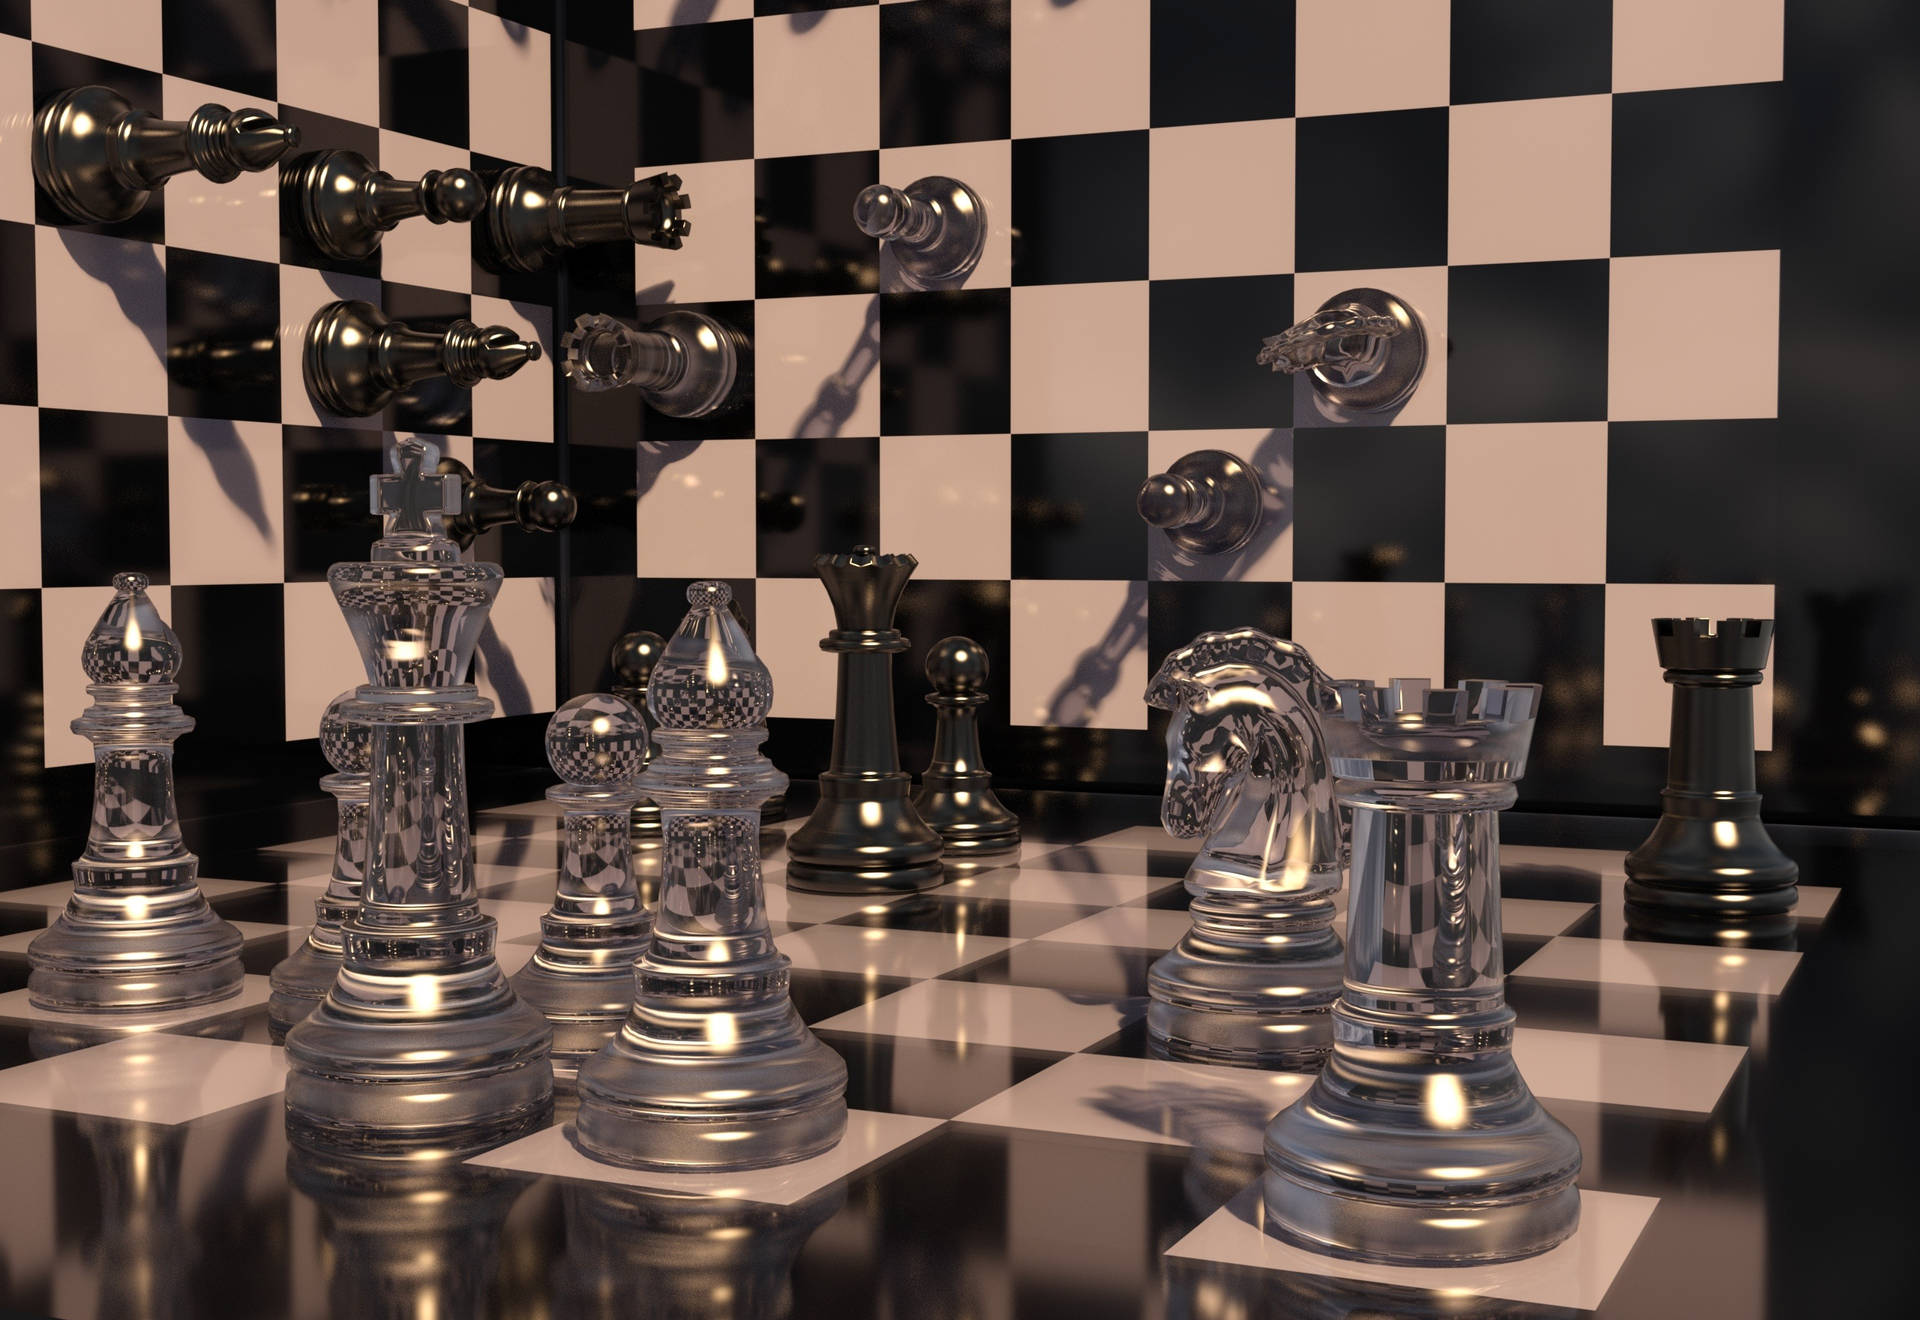 Acrylic Chess Pieces